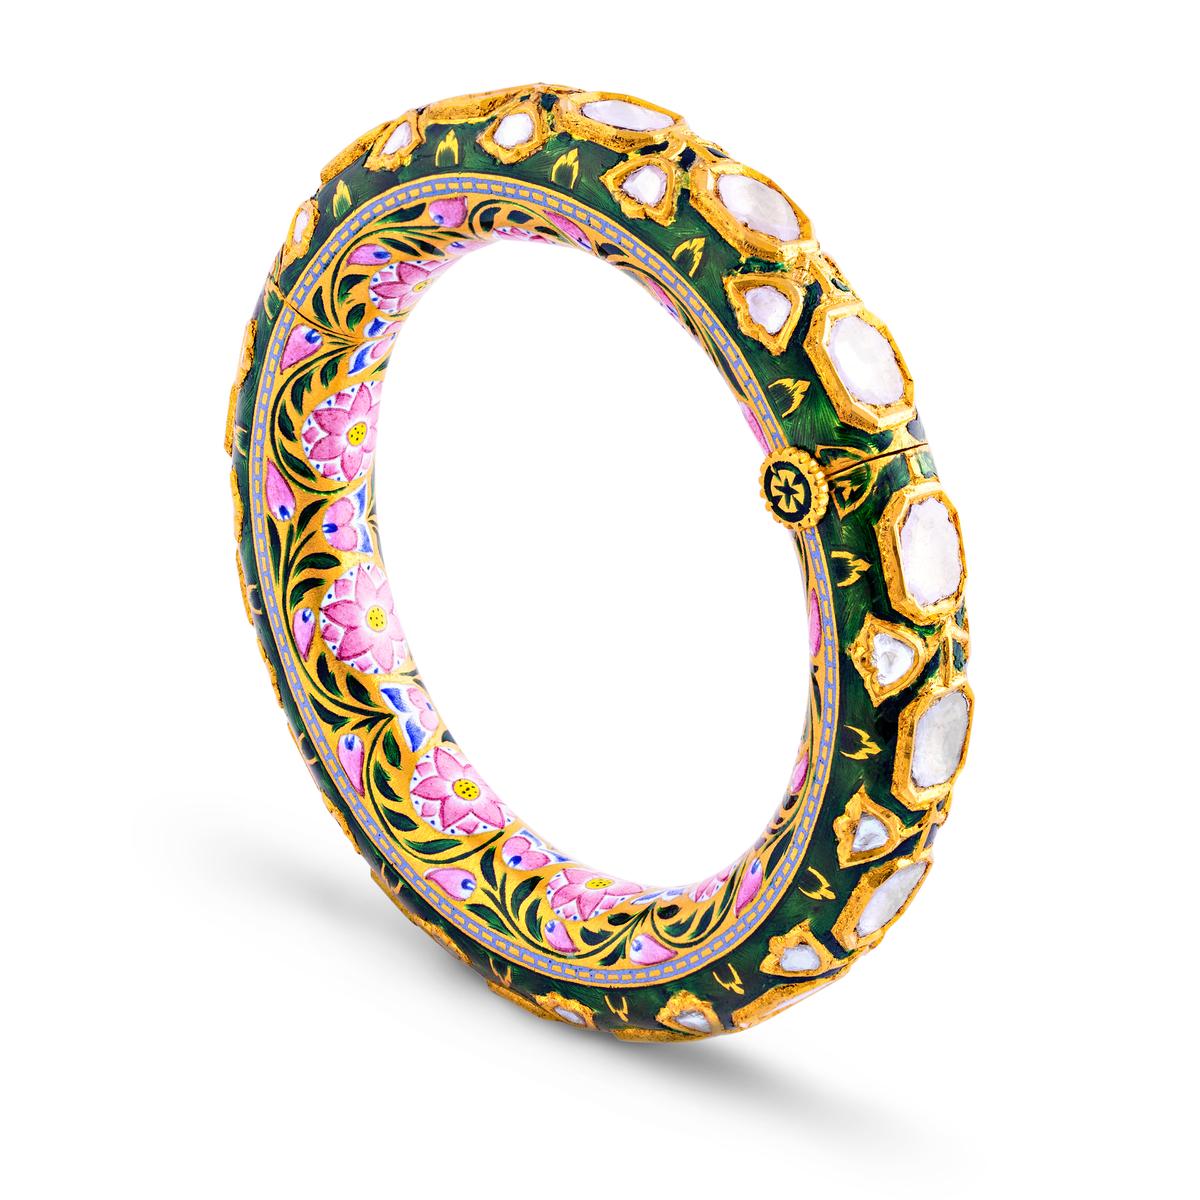 Floral enameled bracelet glazed on 22-karat gold set with diamonds. (Courtesy of Sanjay Kasliwal)